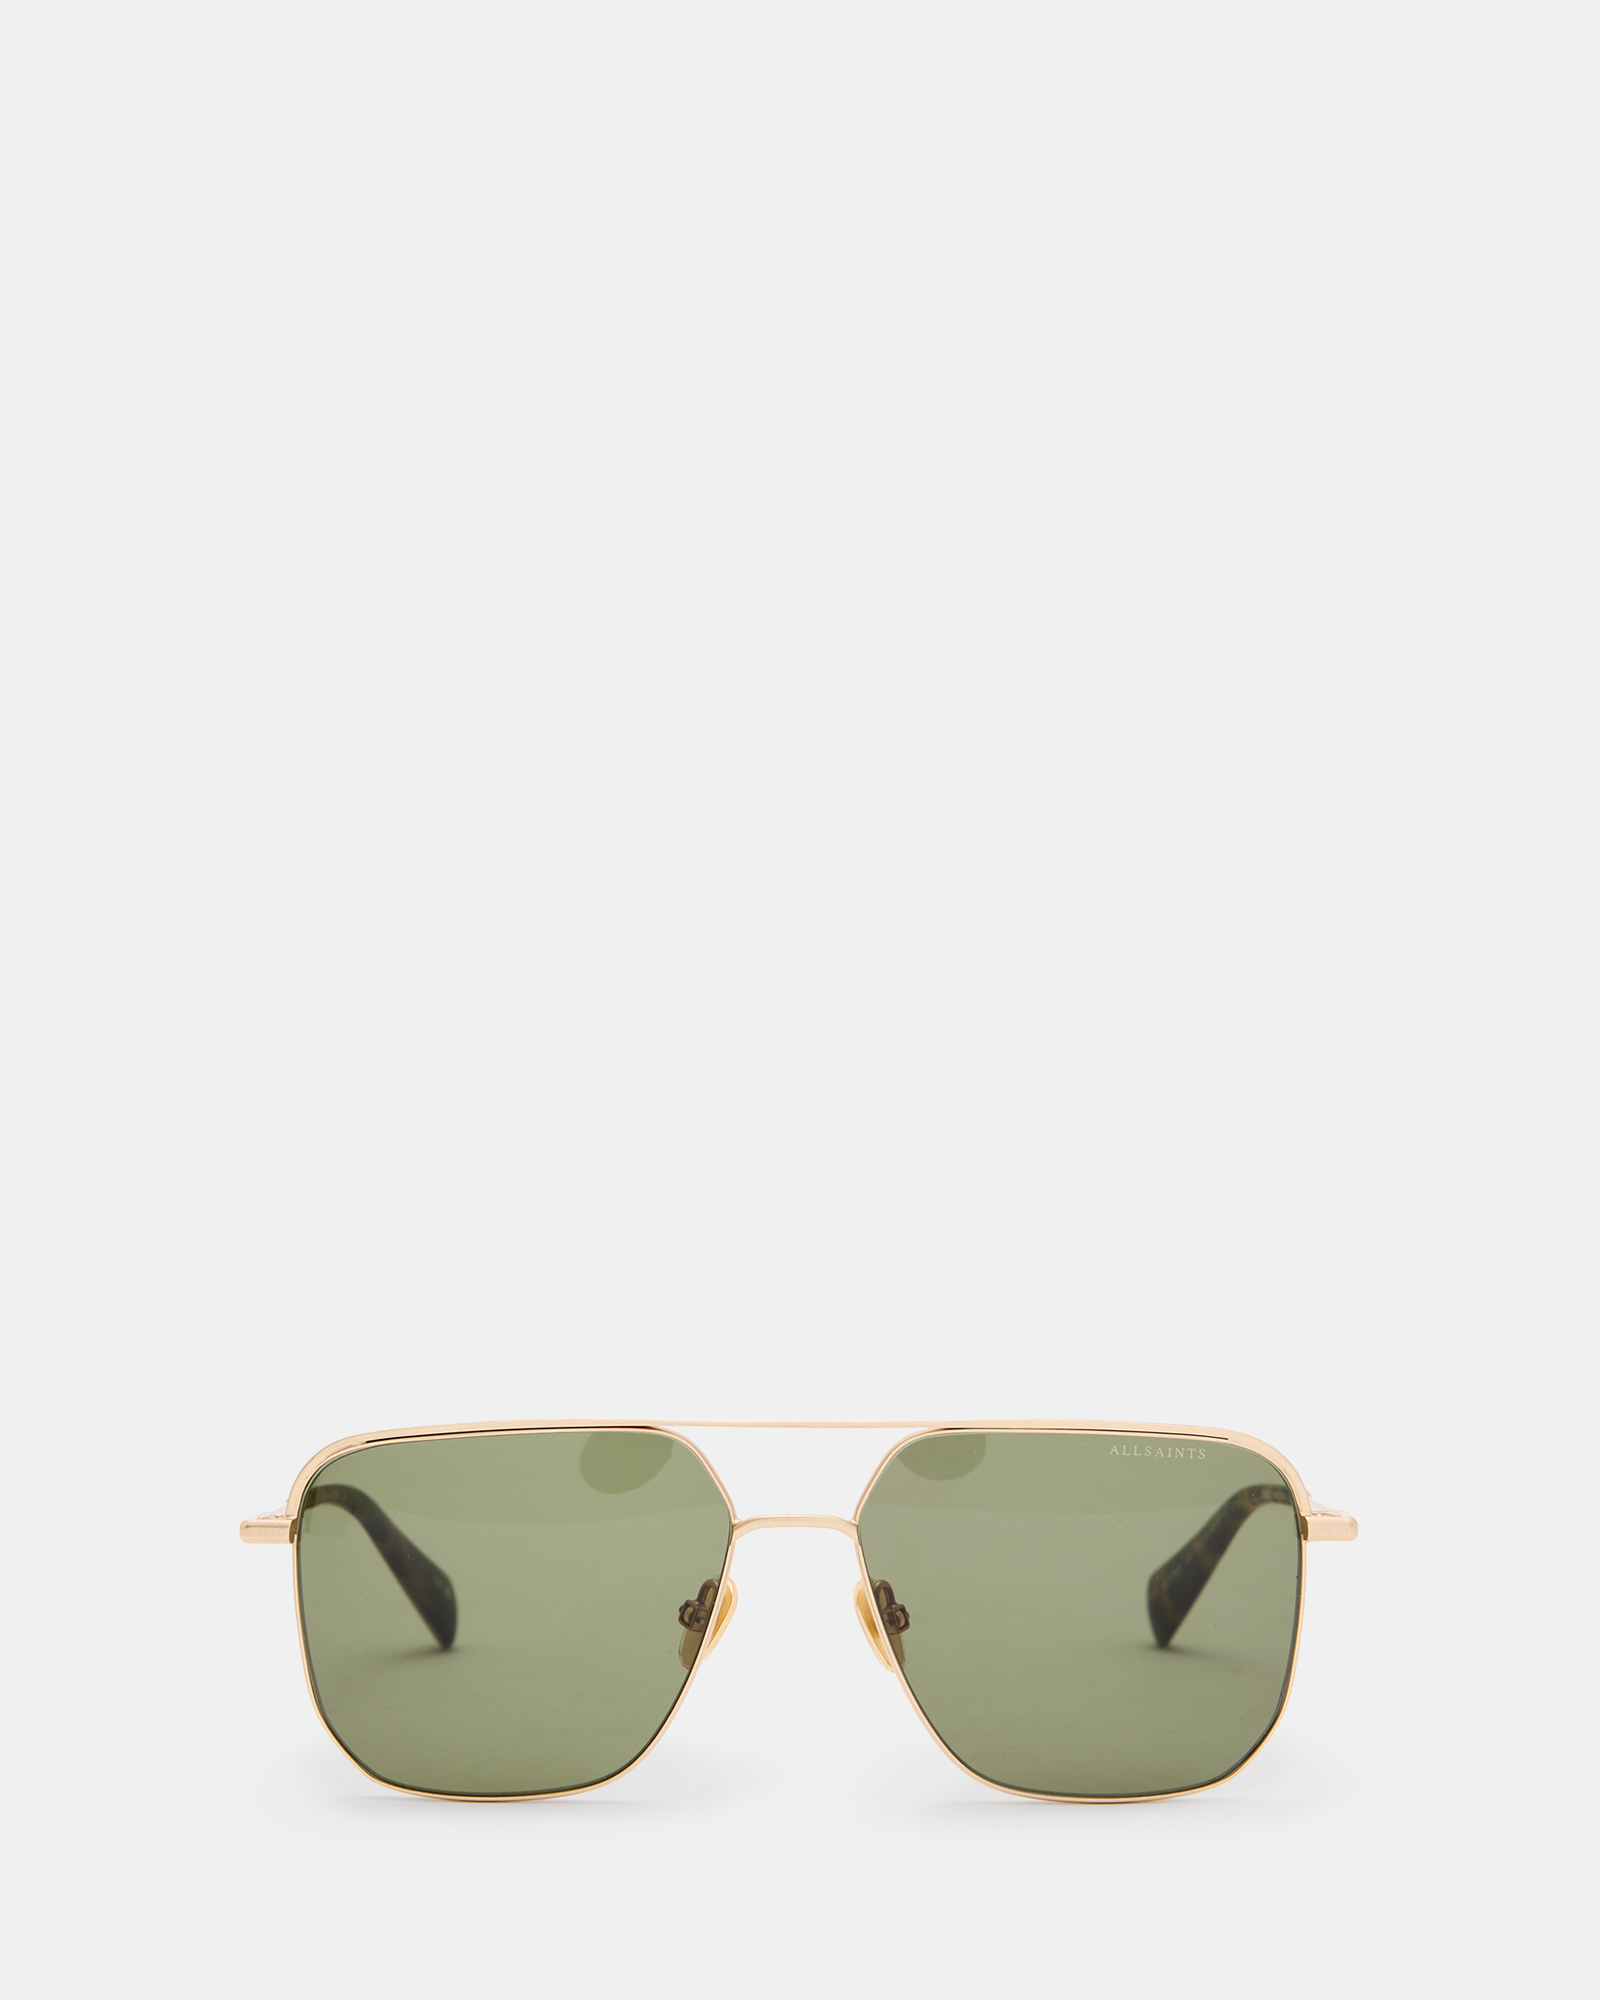 AllSaints Swift Square Aviator Sunglasses,, Gold